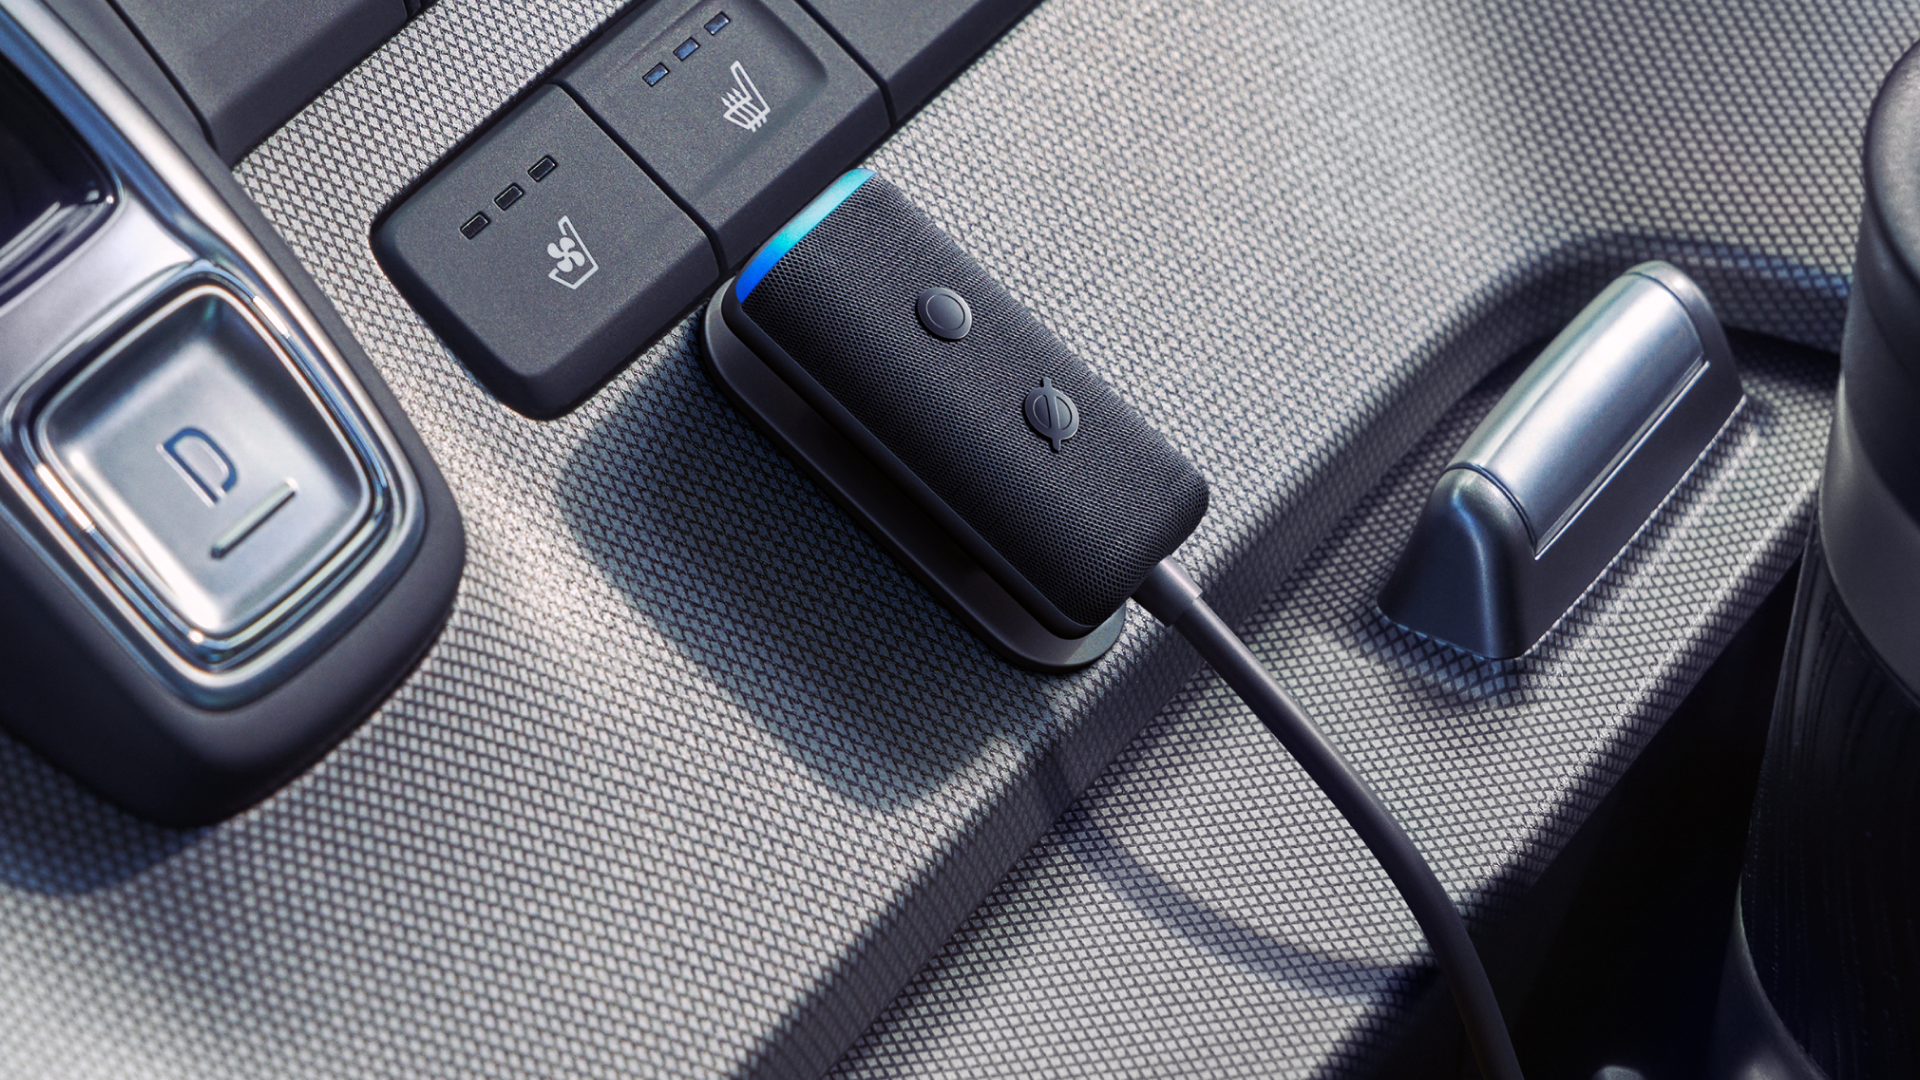 Buy the  Echo Auto (2nd Gen) Hands-free Alexa Car Accessory - Slim  ( B09Y1GZR7T ) online 